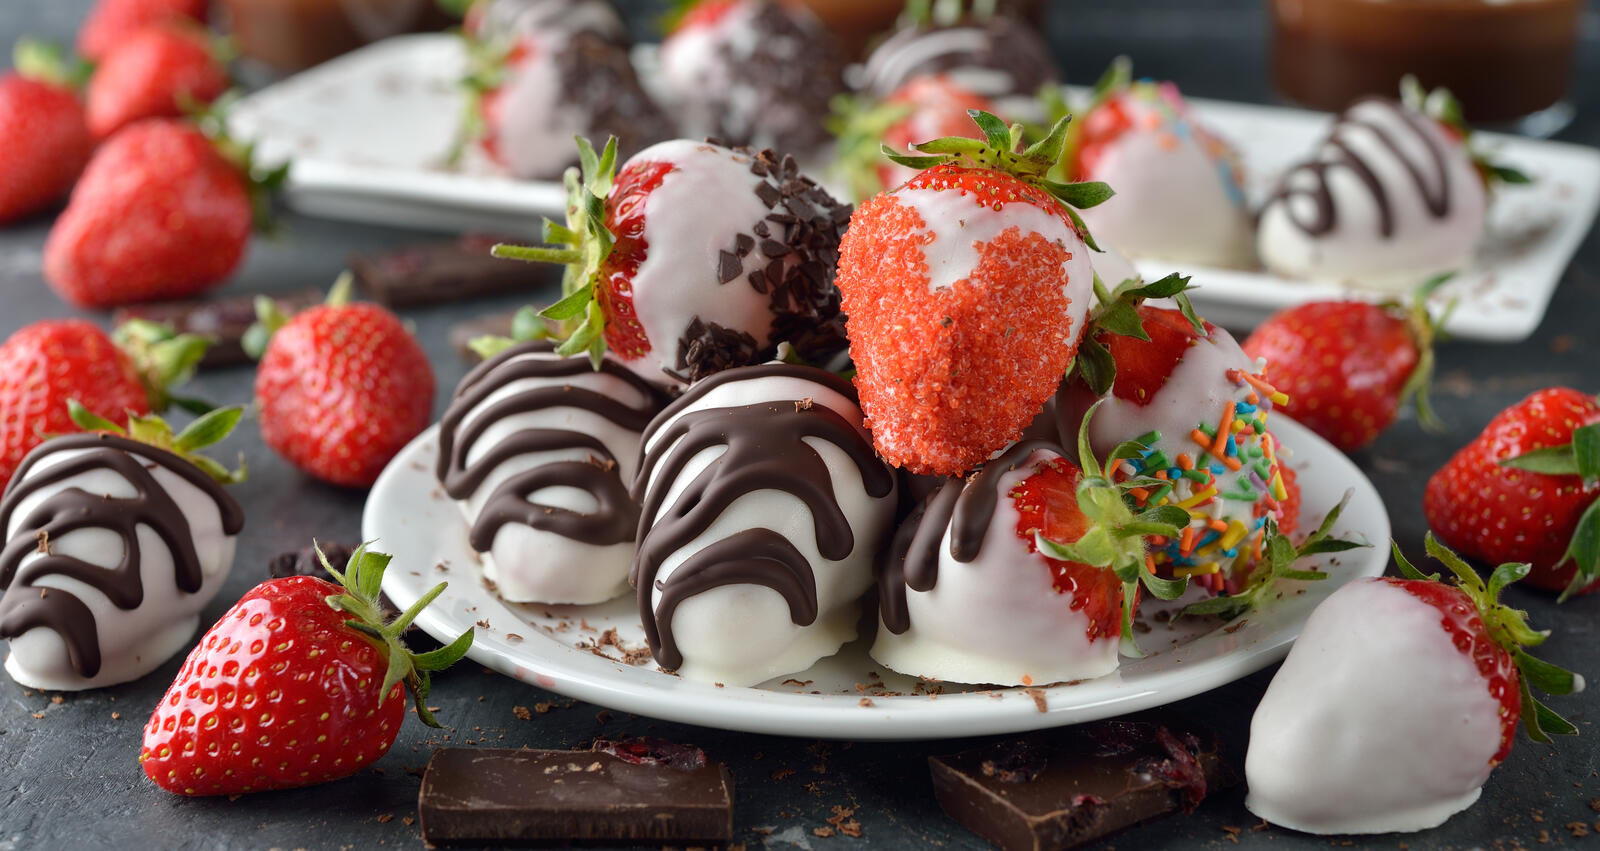 Wallpapers dessert strawberries in chocolate strawberries on the desktop